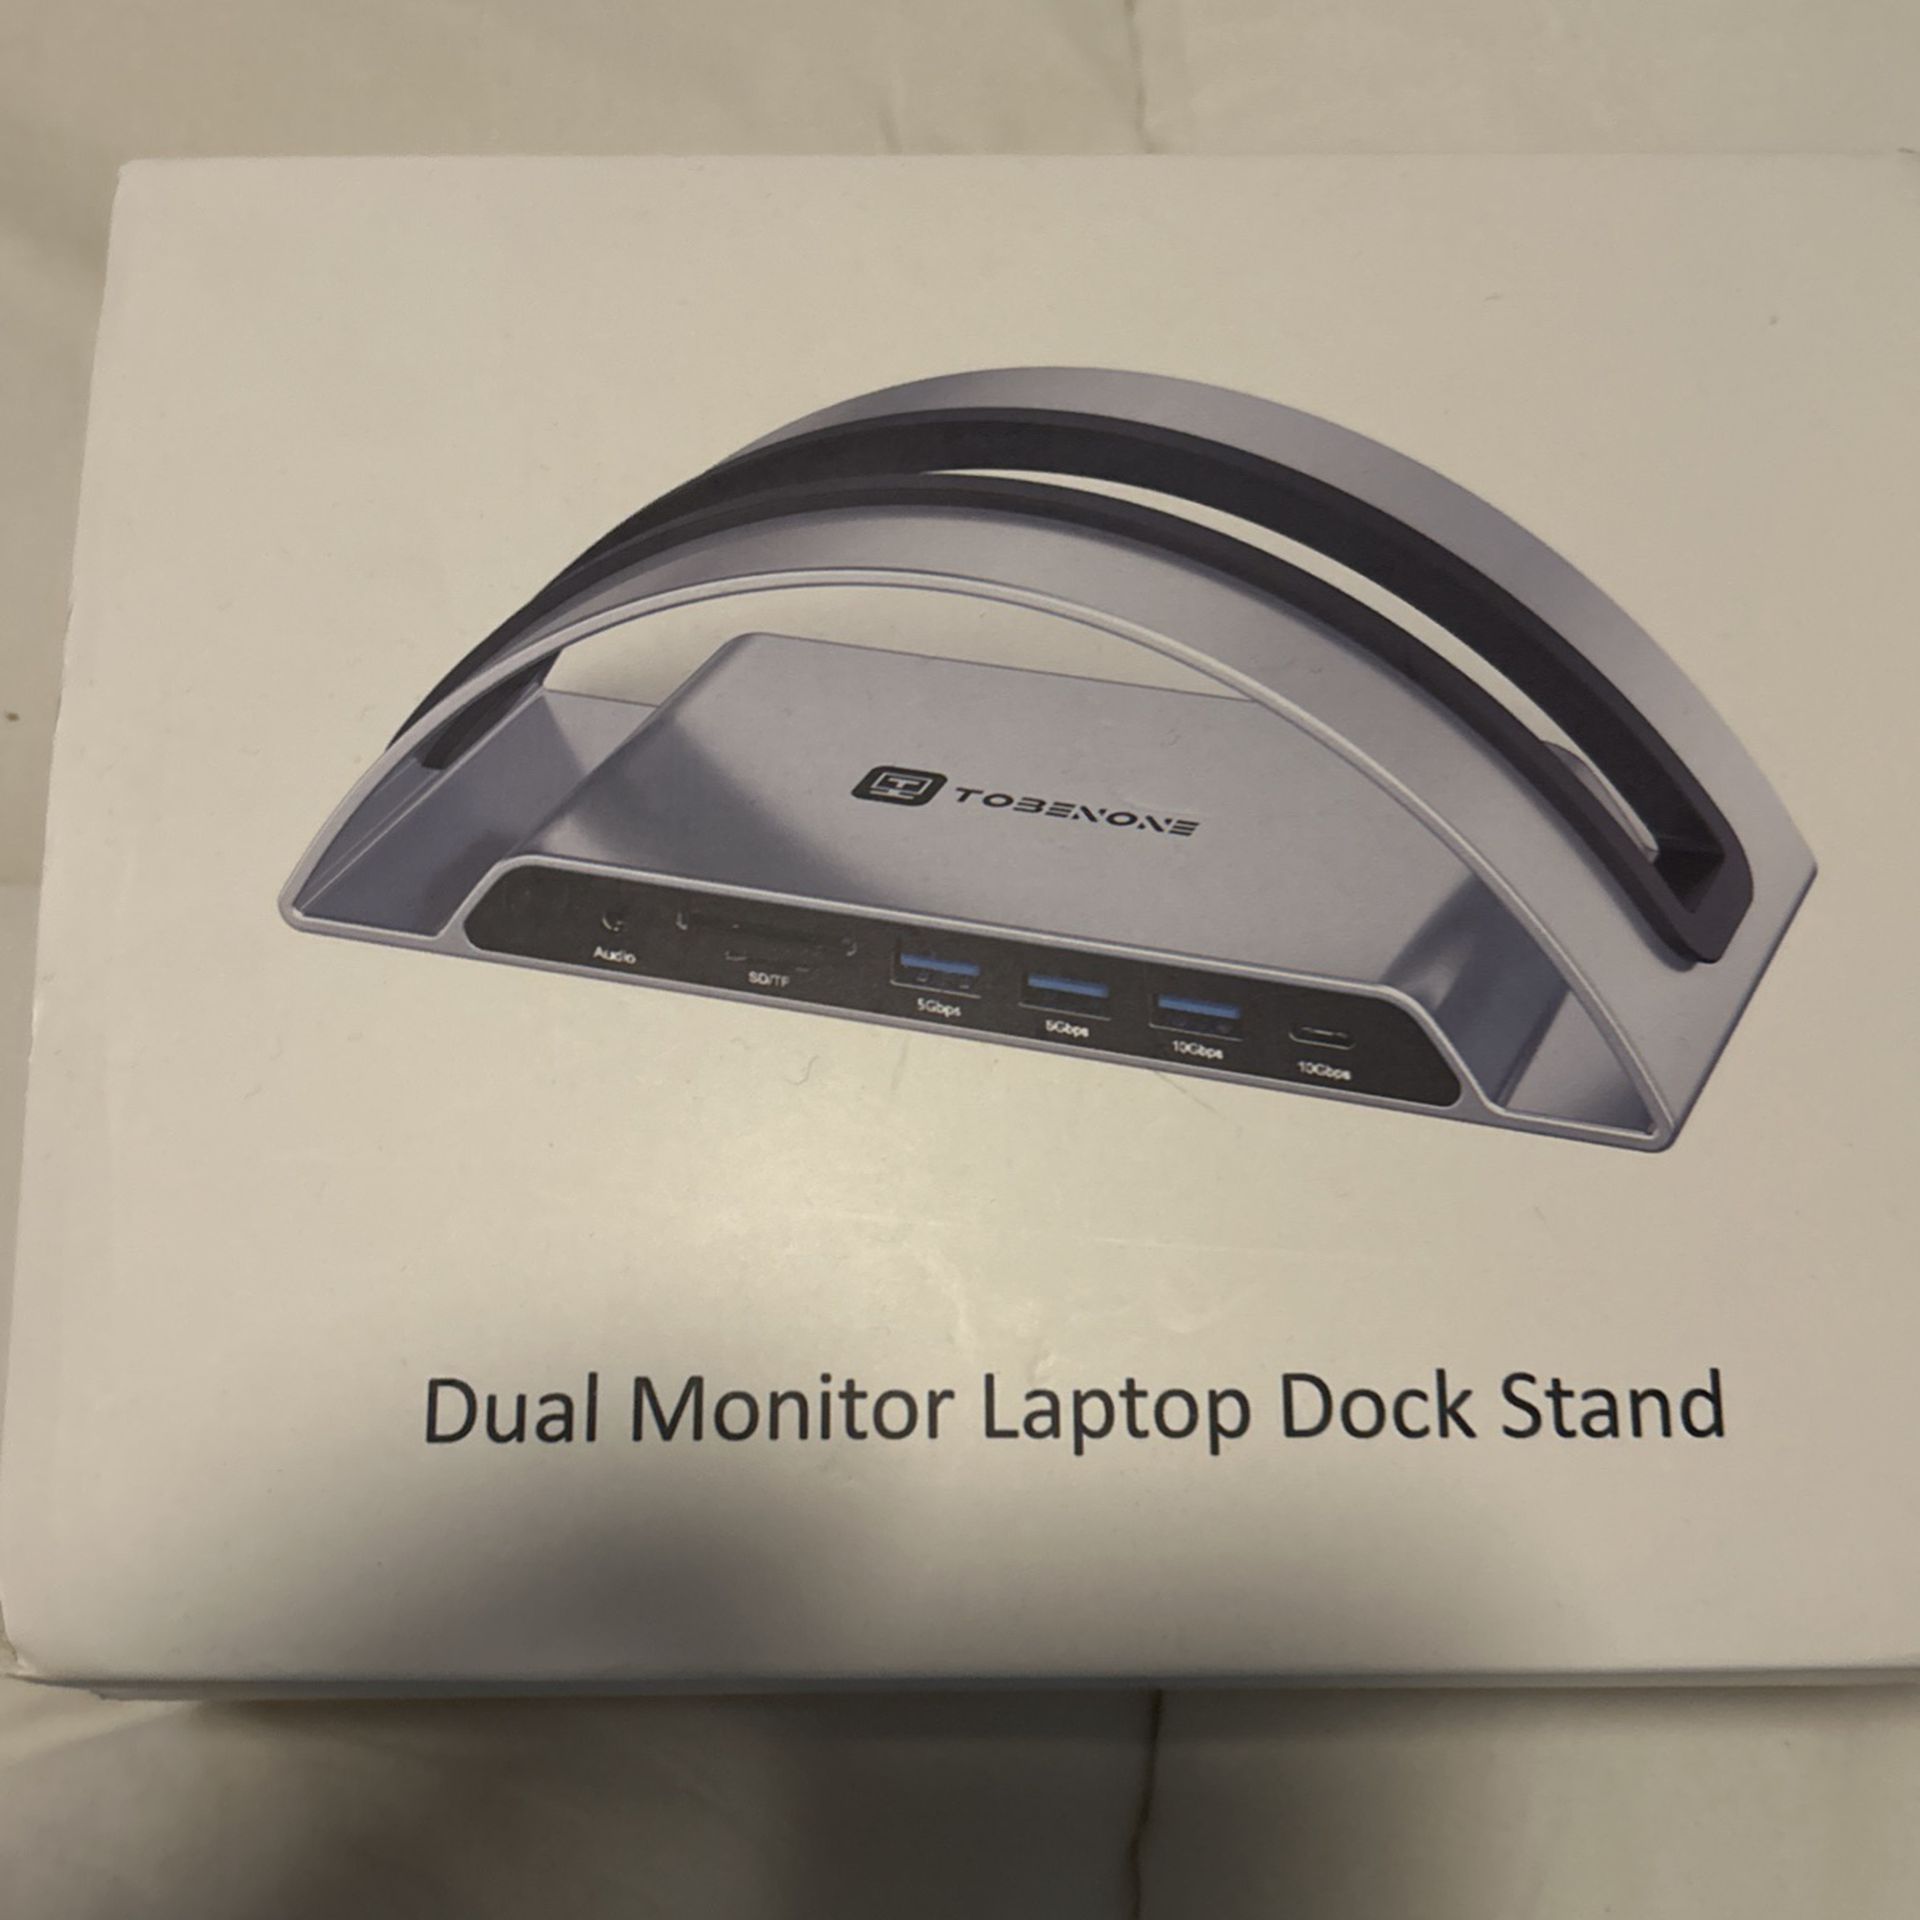 Dual Monitor Laptop Dockstand Tobenone Model Uds - 022s